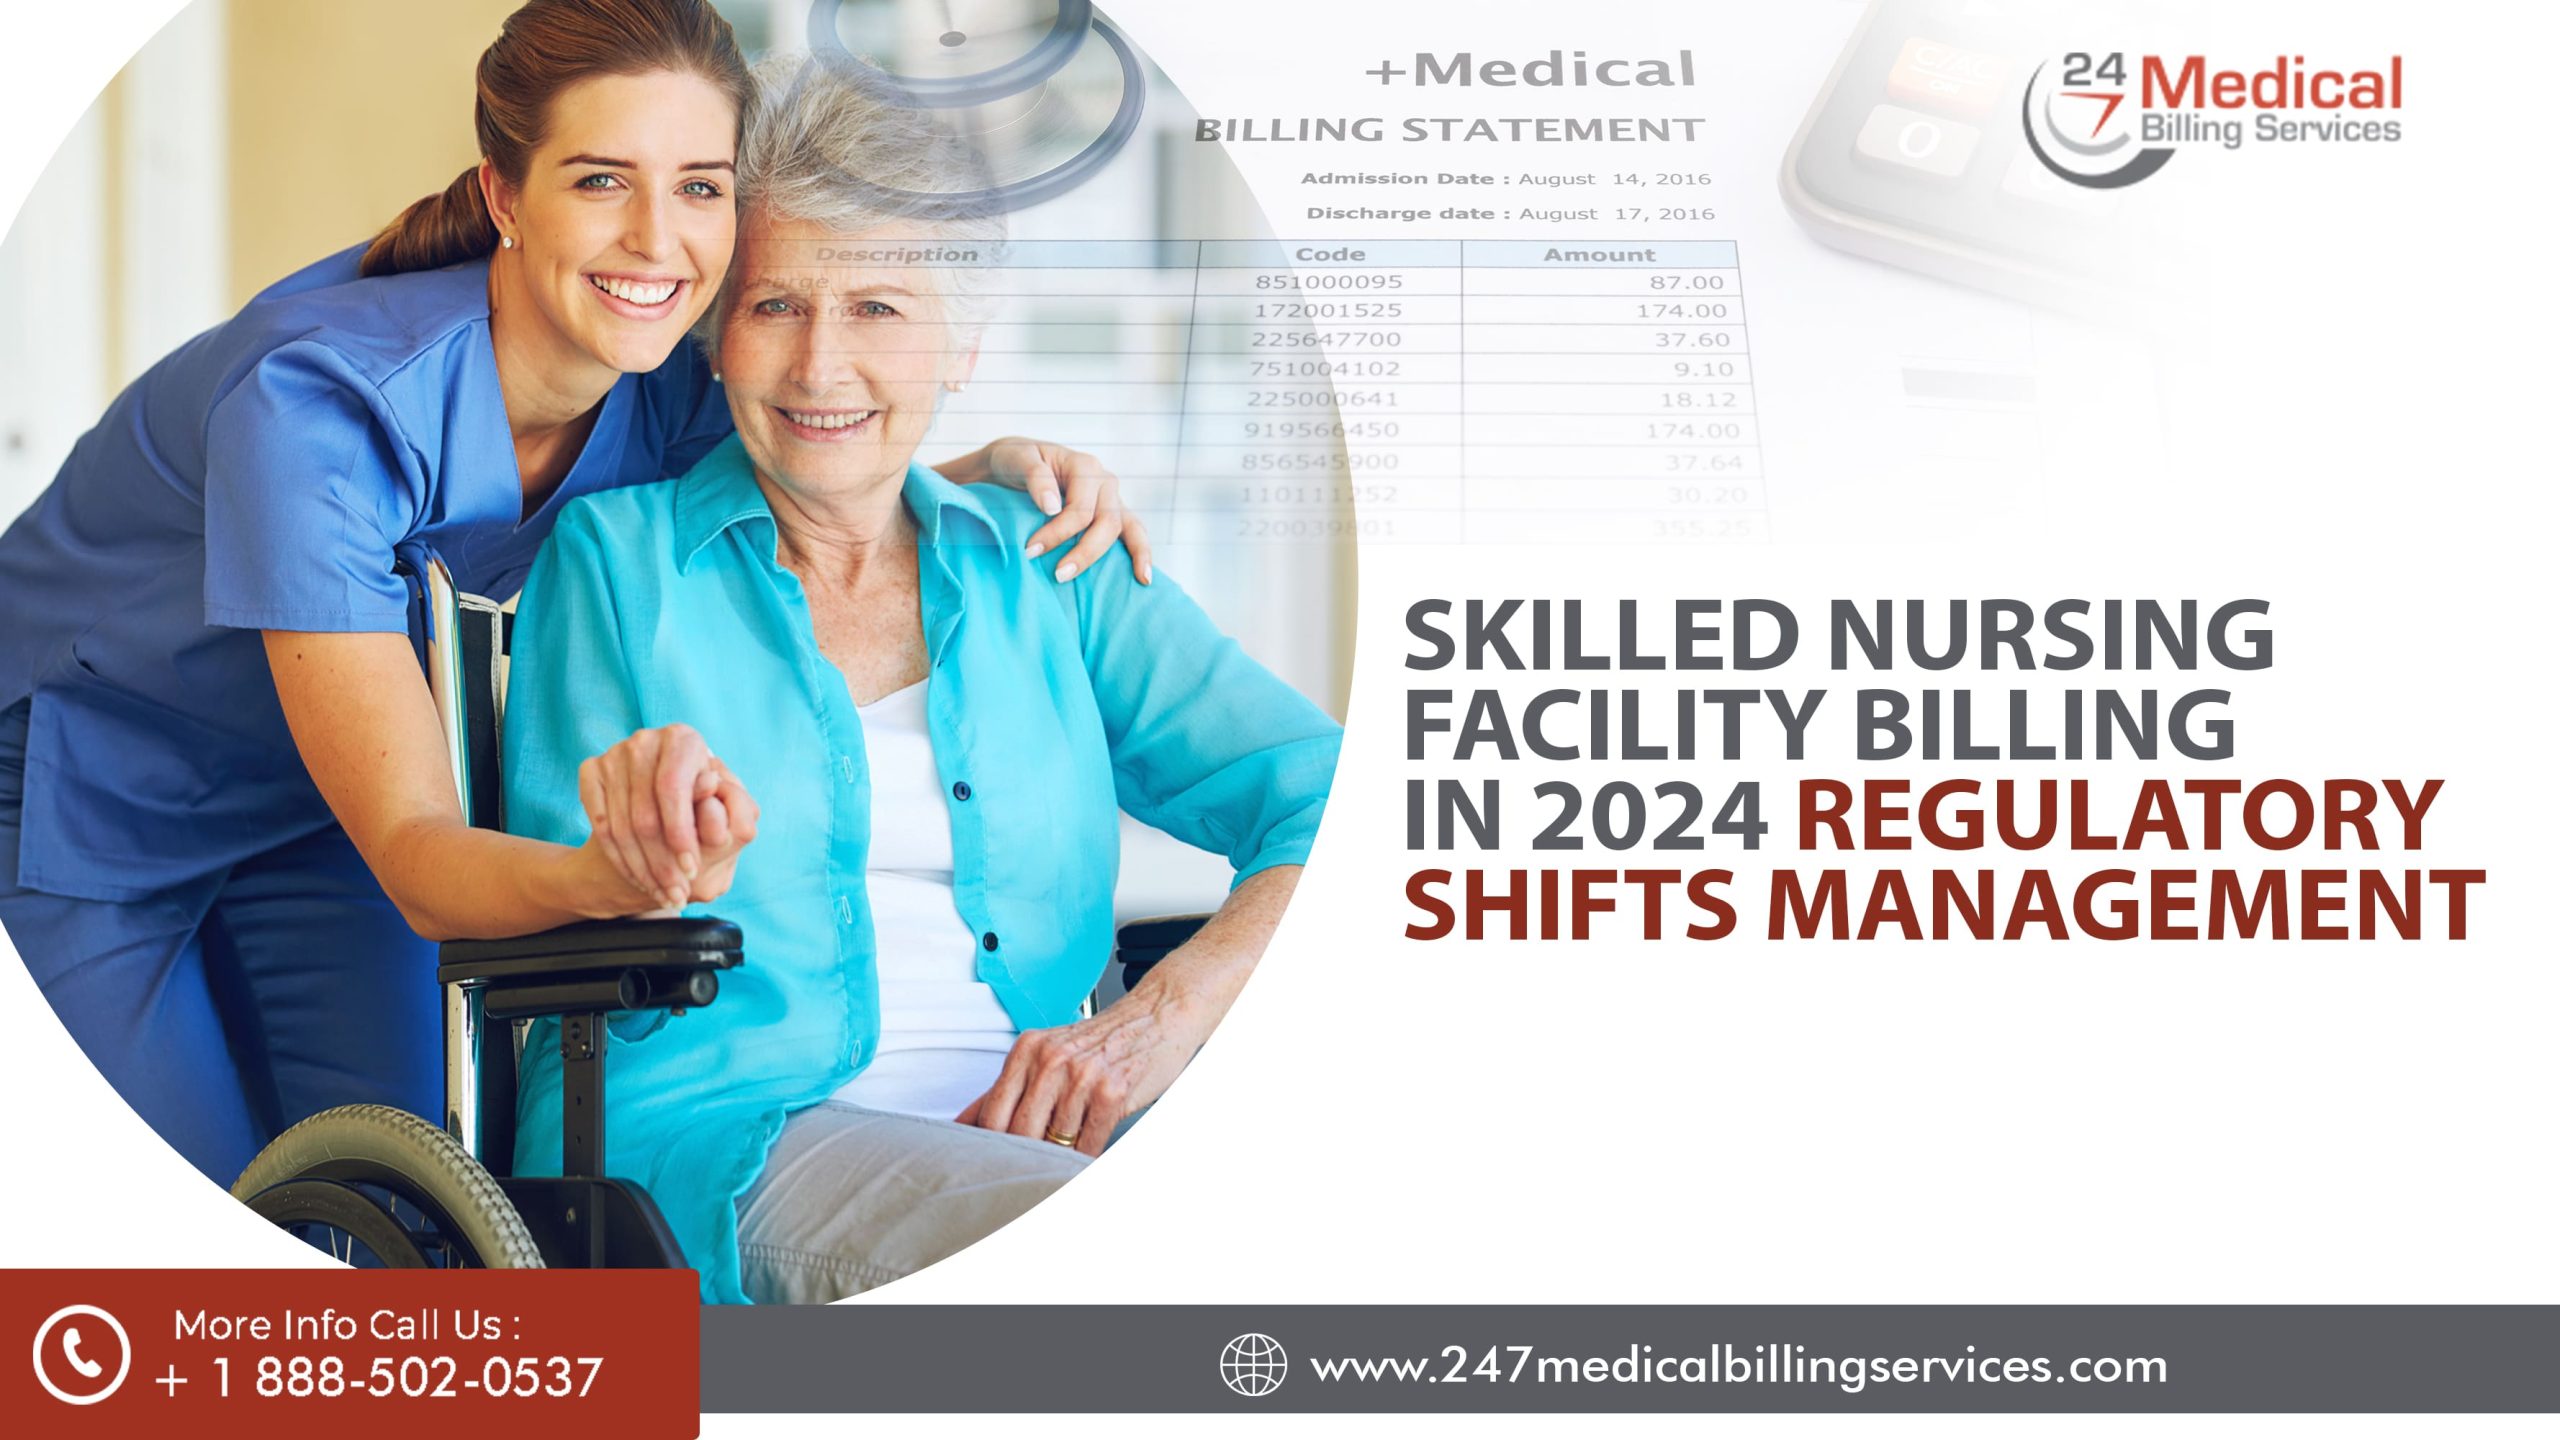  Skilled Nursing Facility Billing in 2024 Regulatory Shifts Management